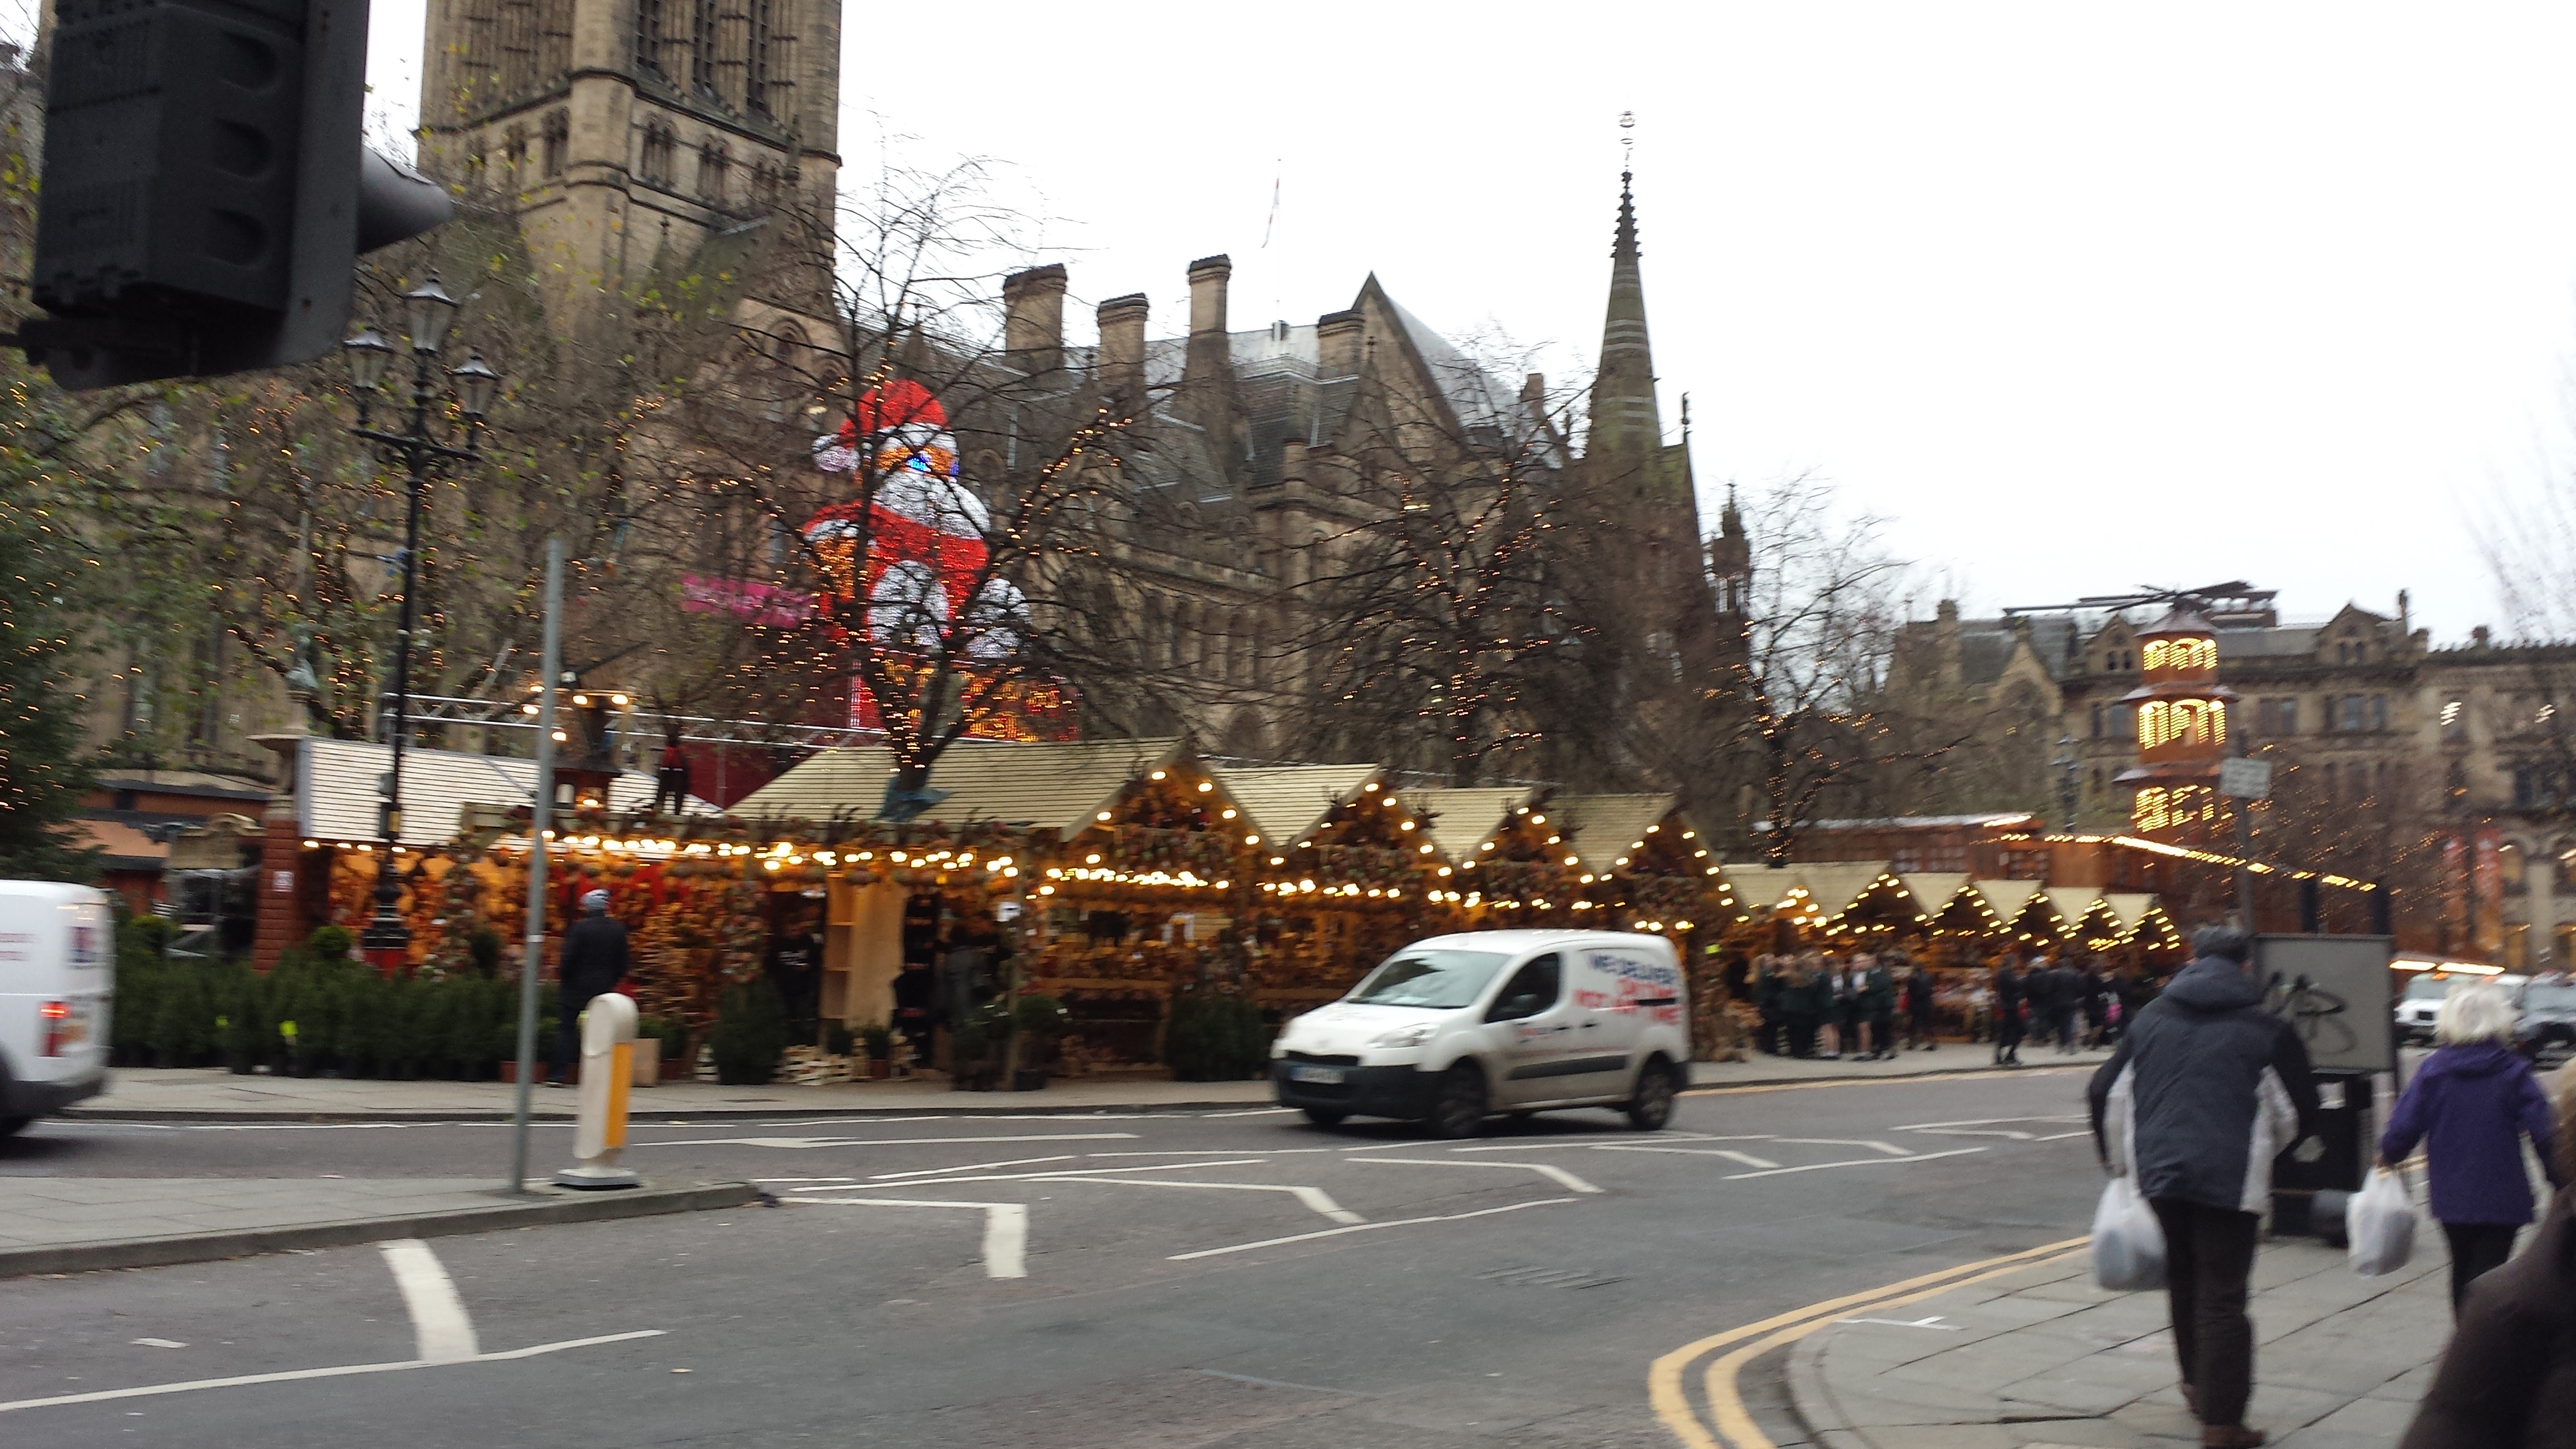 Manchester Christmas Market